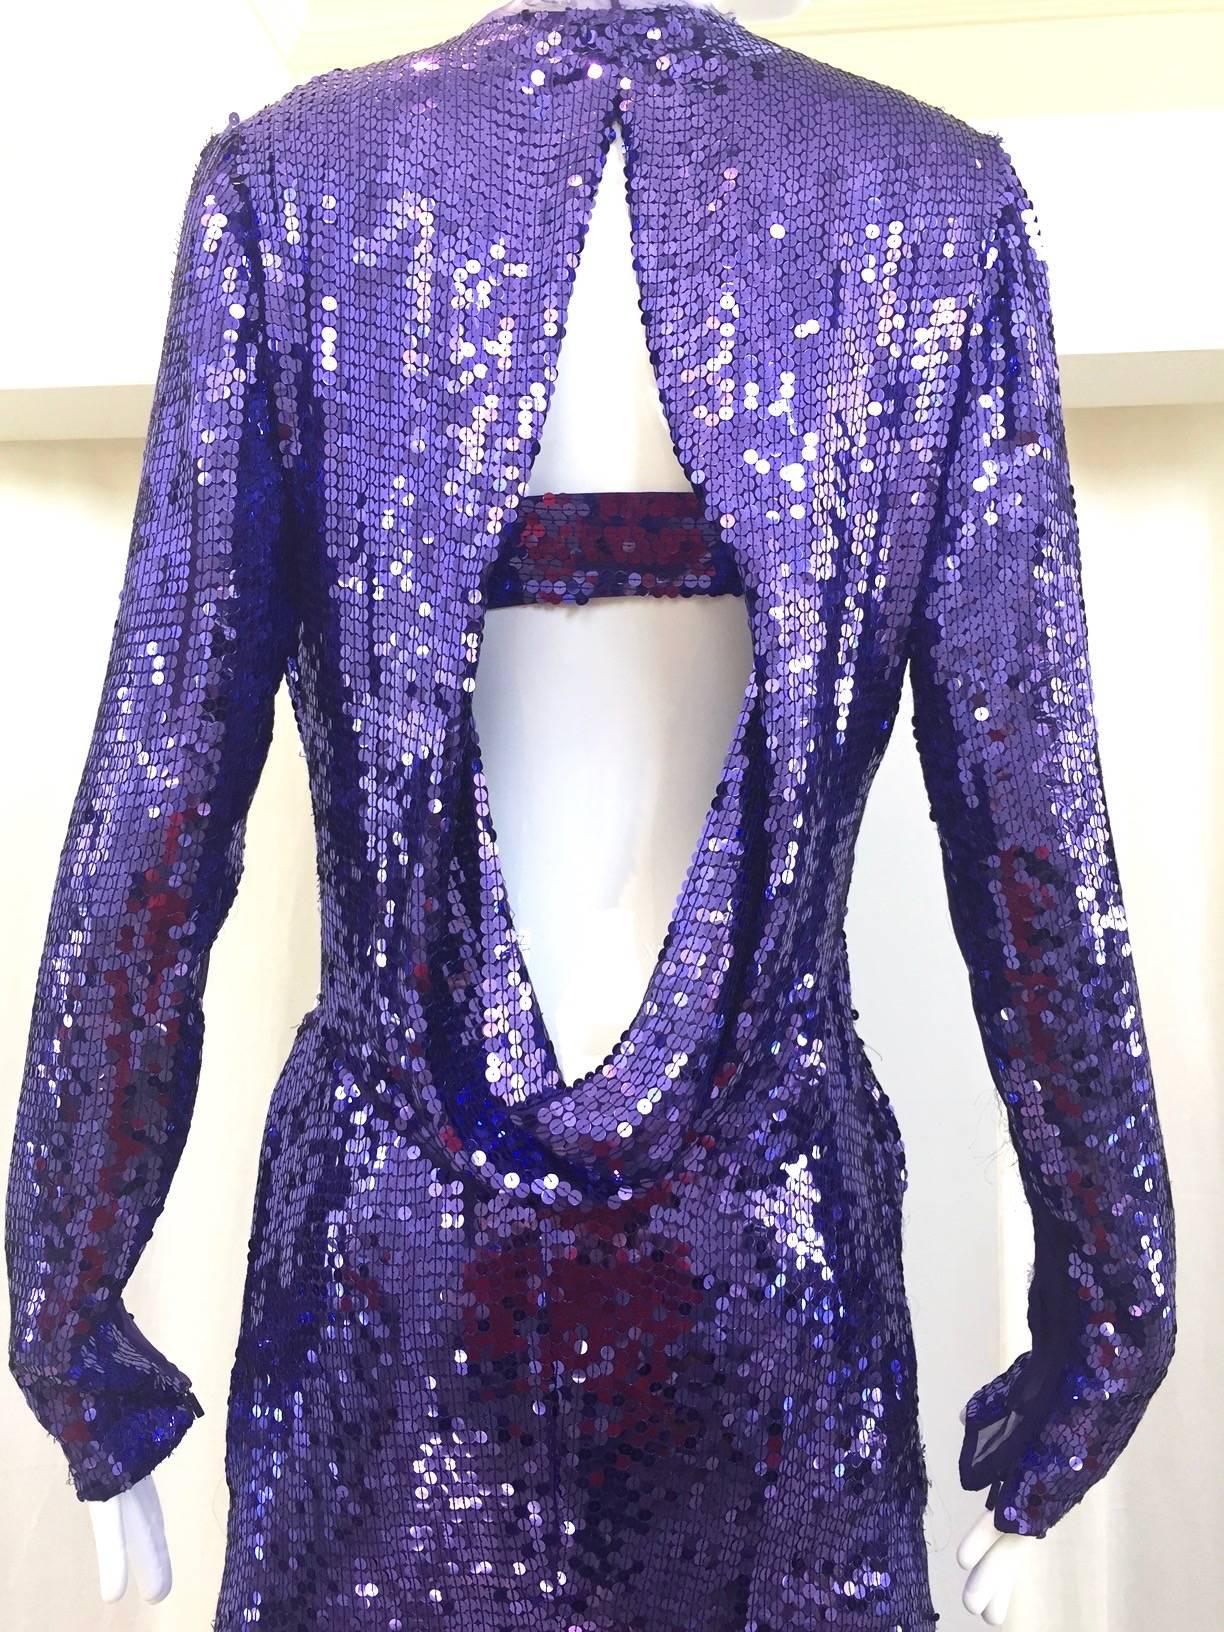 gucci rhinestone dress purple